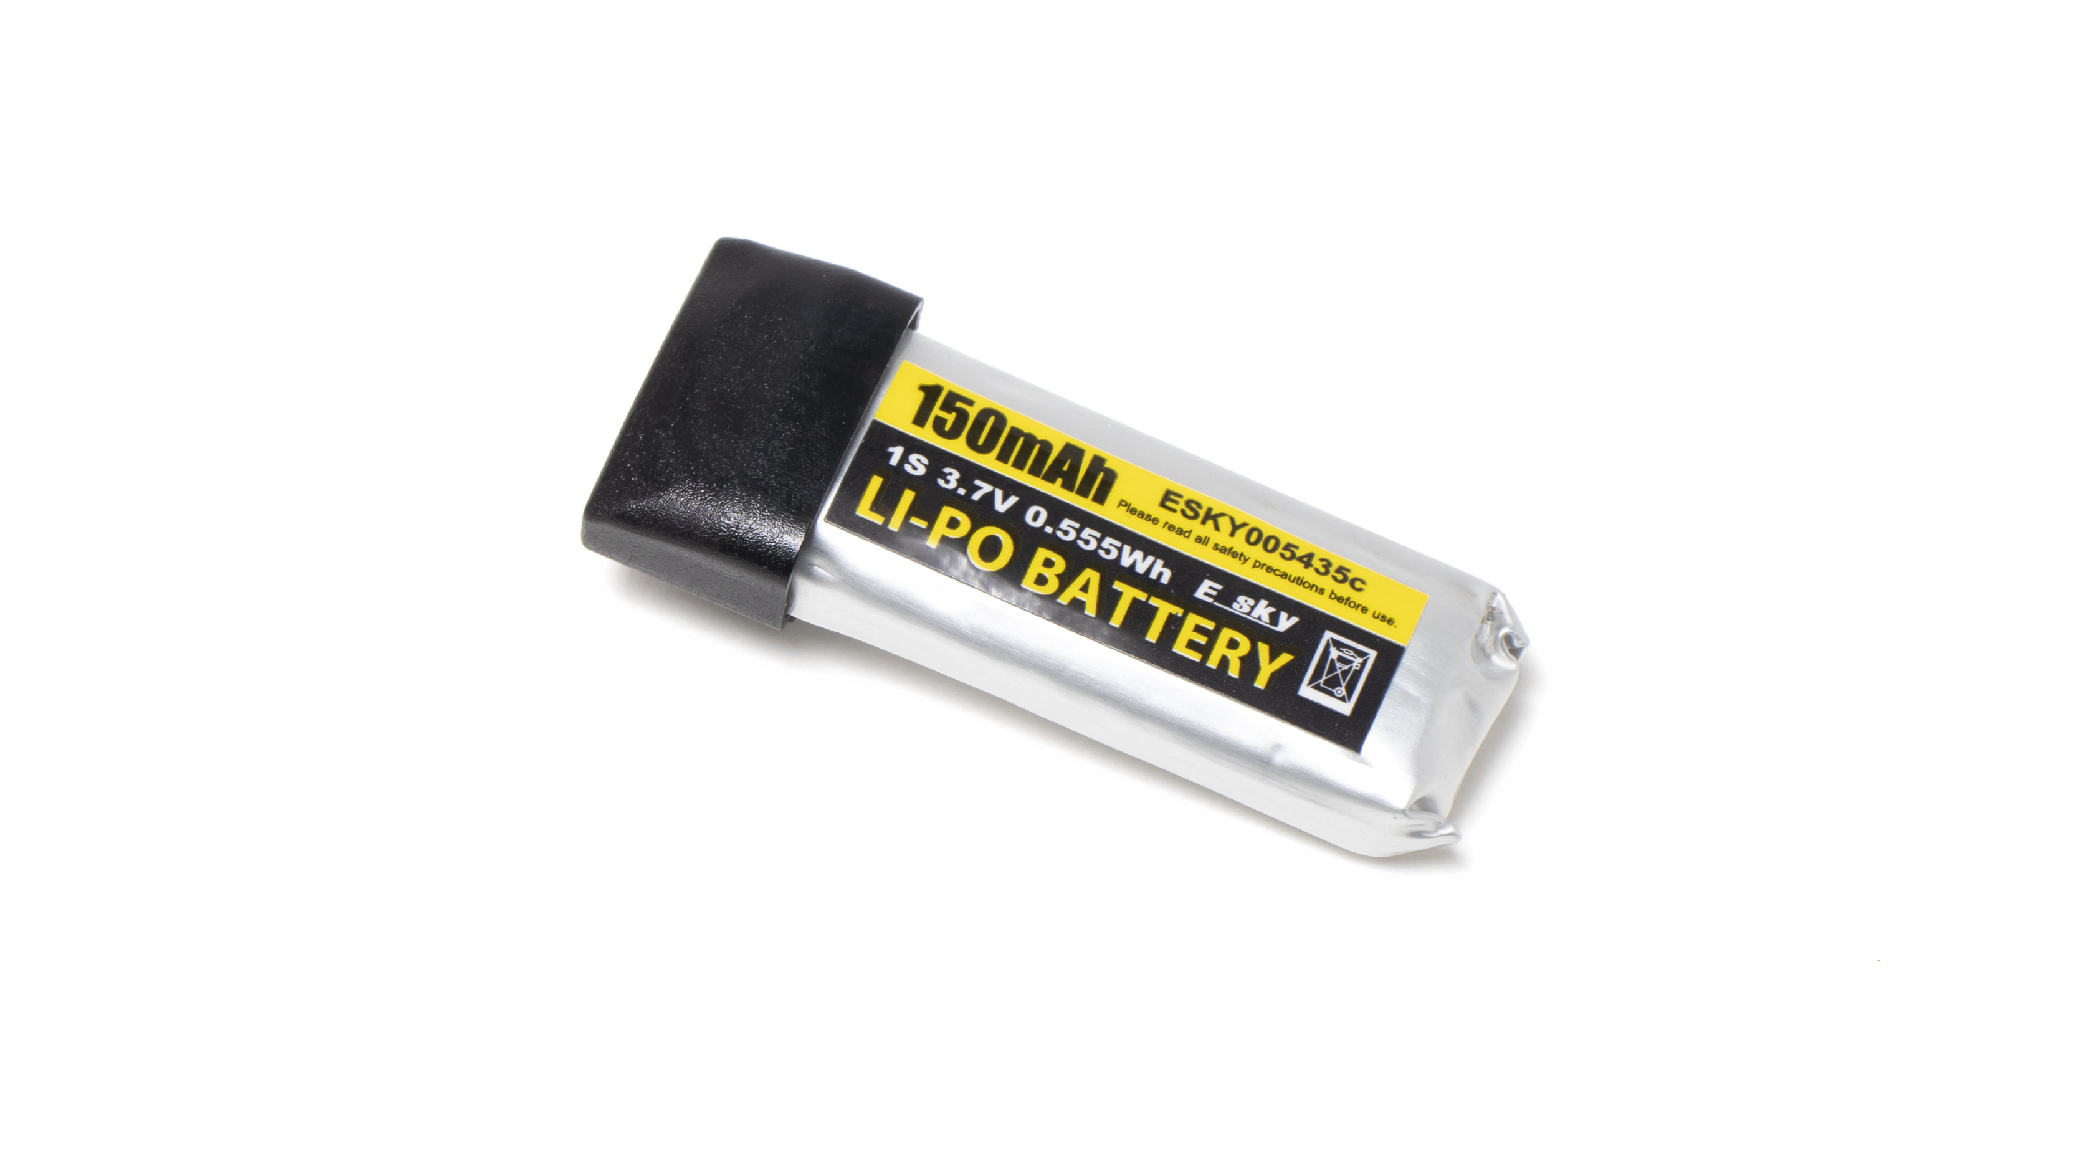 Li-Po Battery - ESKY005435C